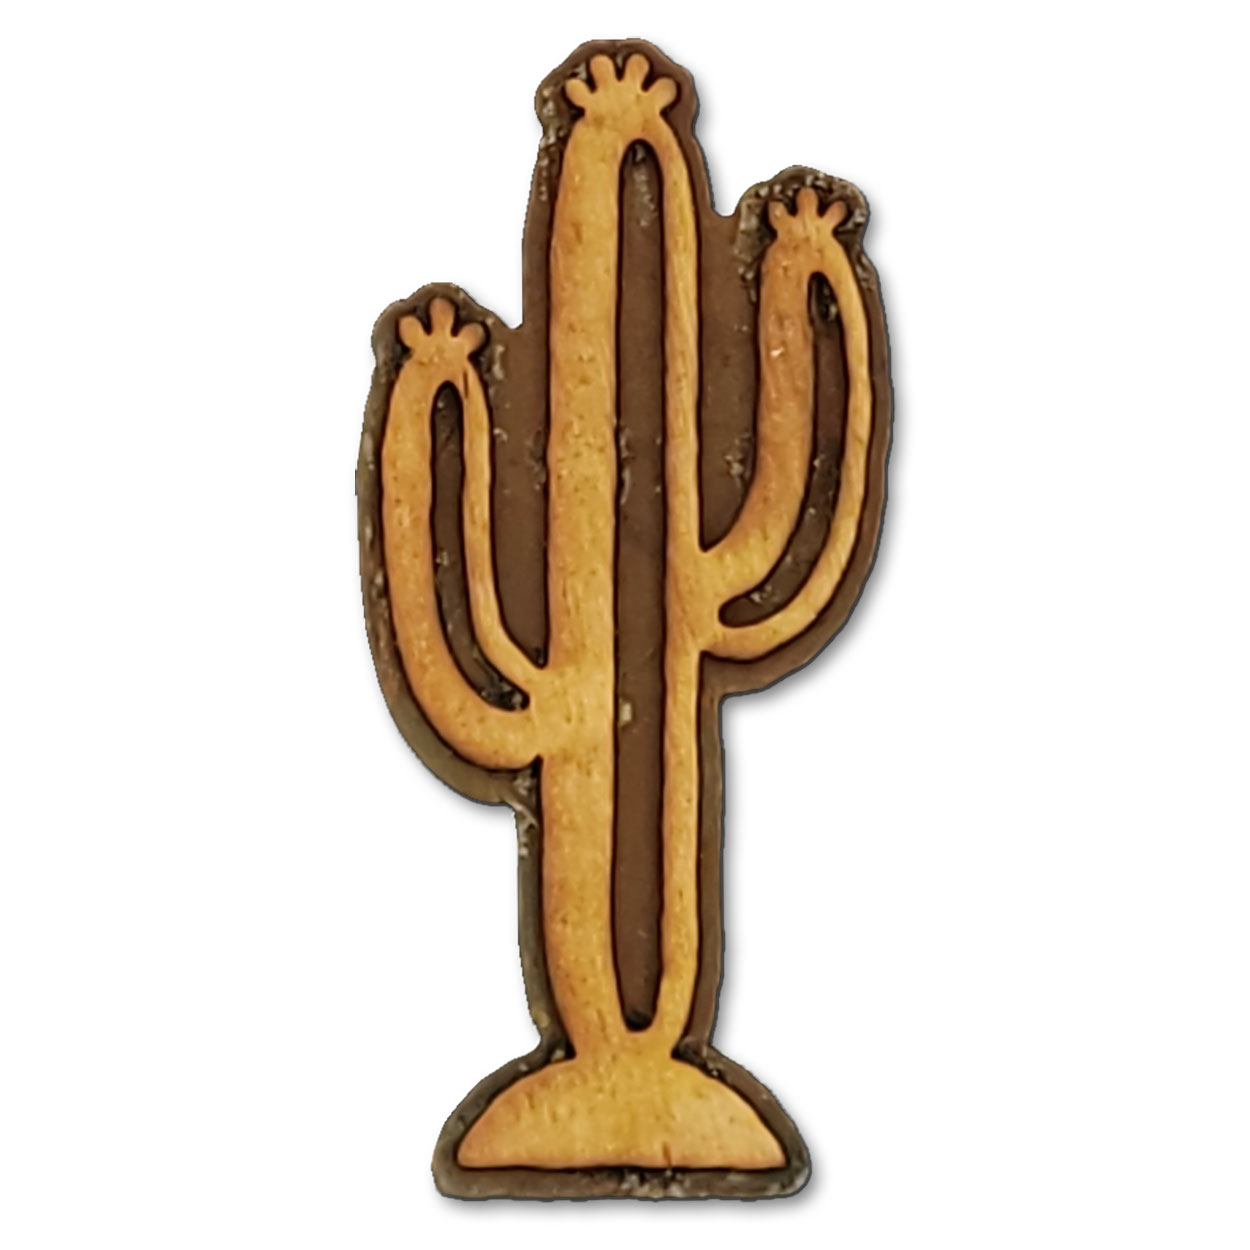 166201 - 4.5in Saguaro Cactus Magnets Wood on Metal Magnet